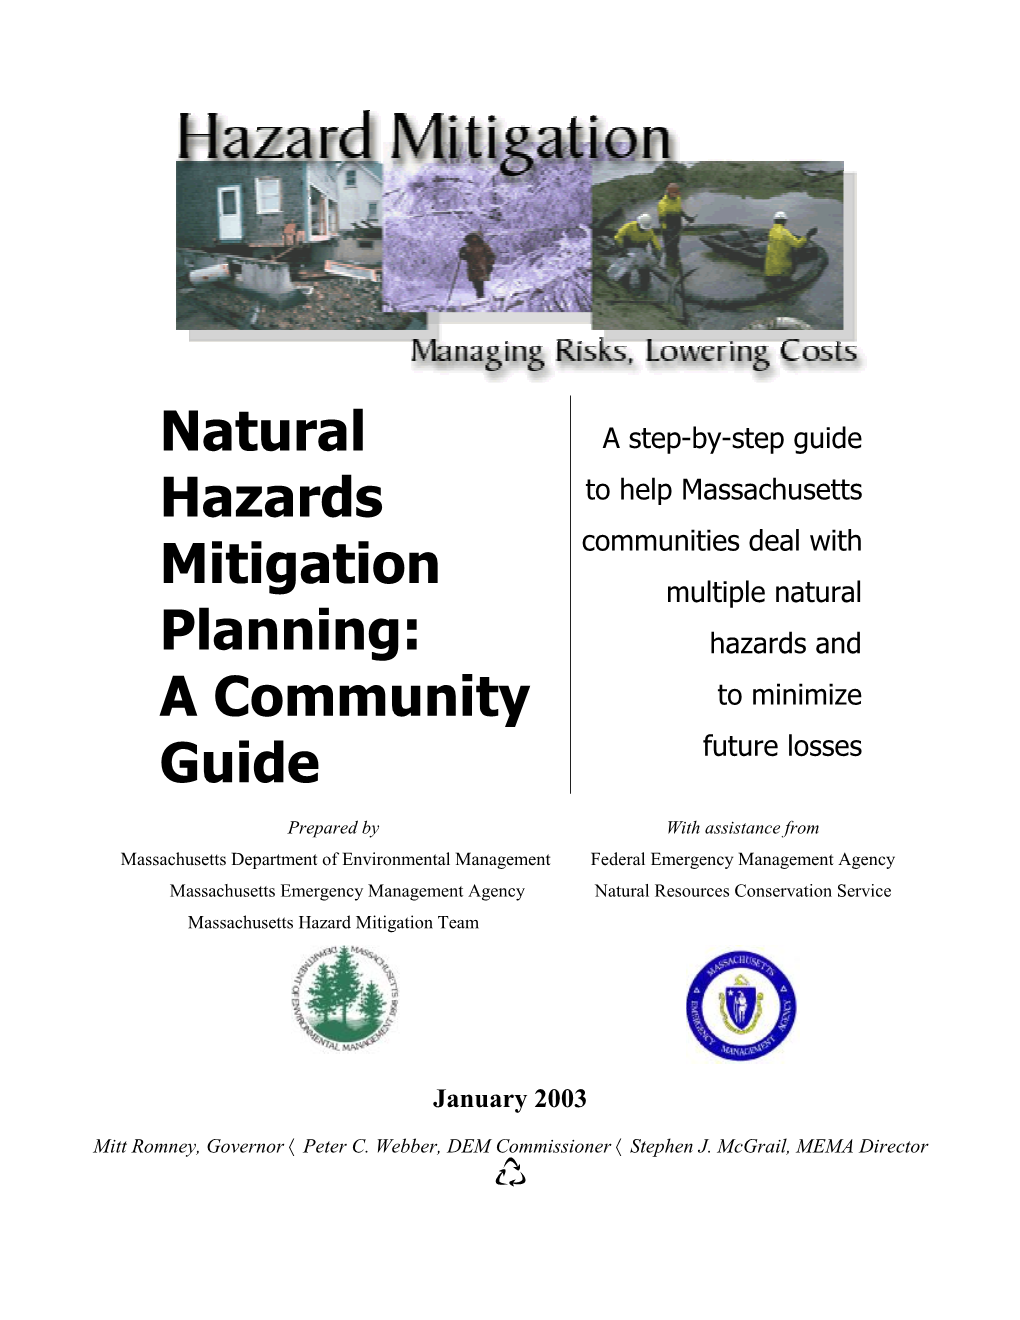 Natural Hazards Mitigation Planning: a Community Guide